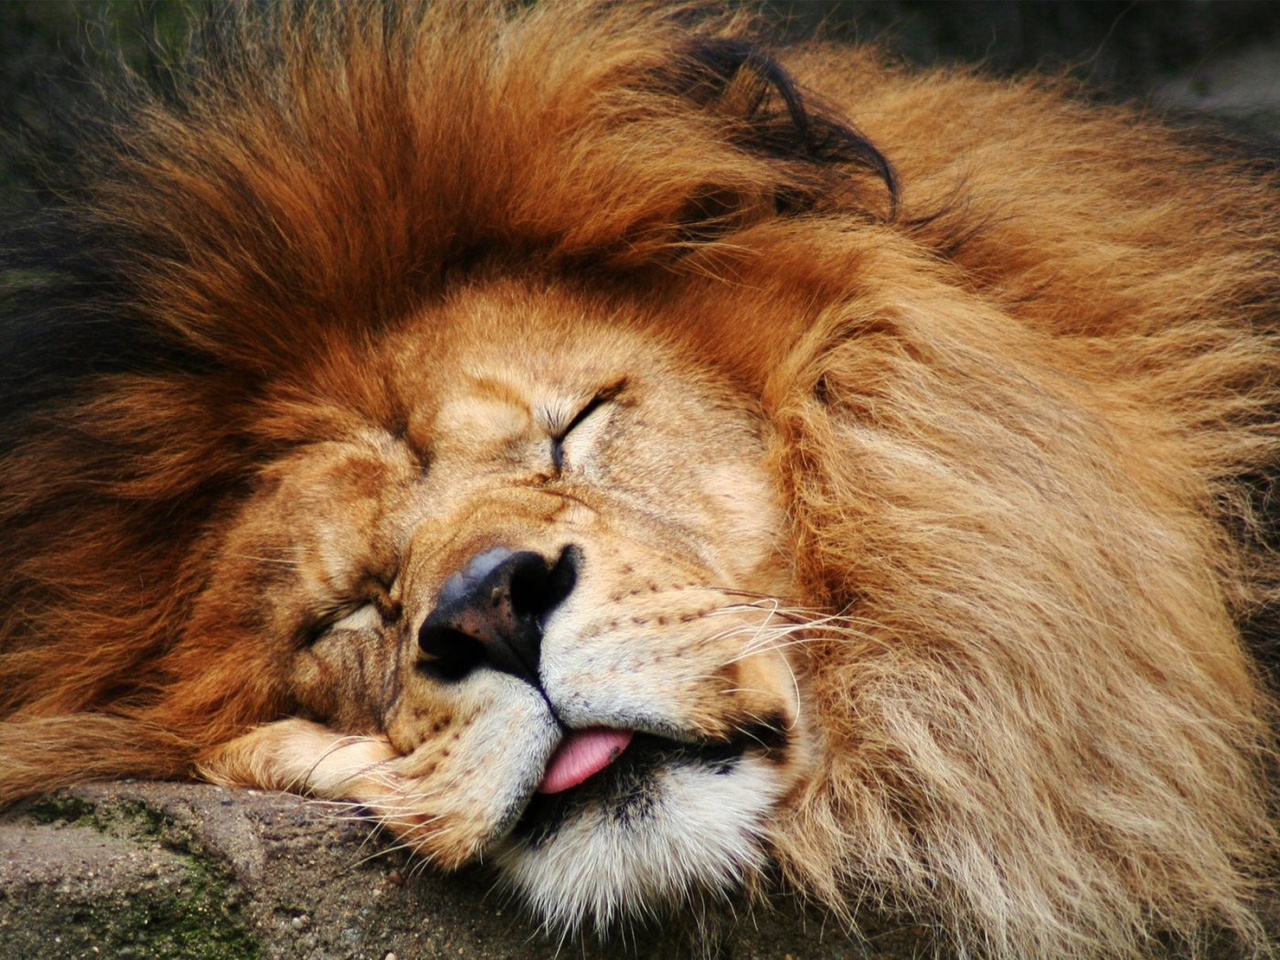 Goodnight lions!